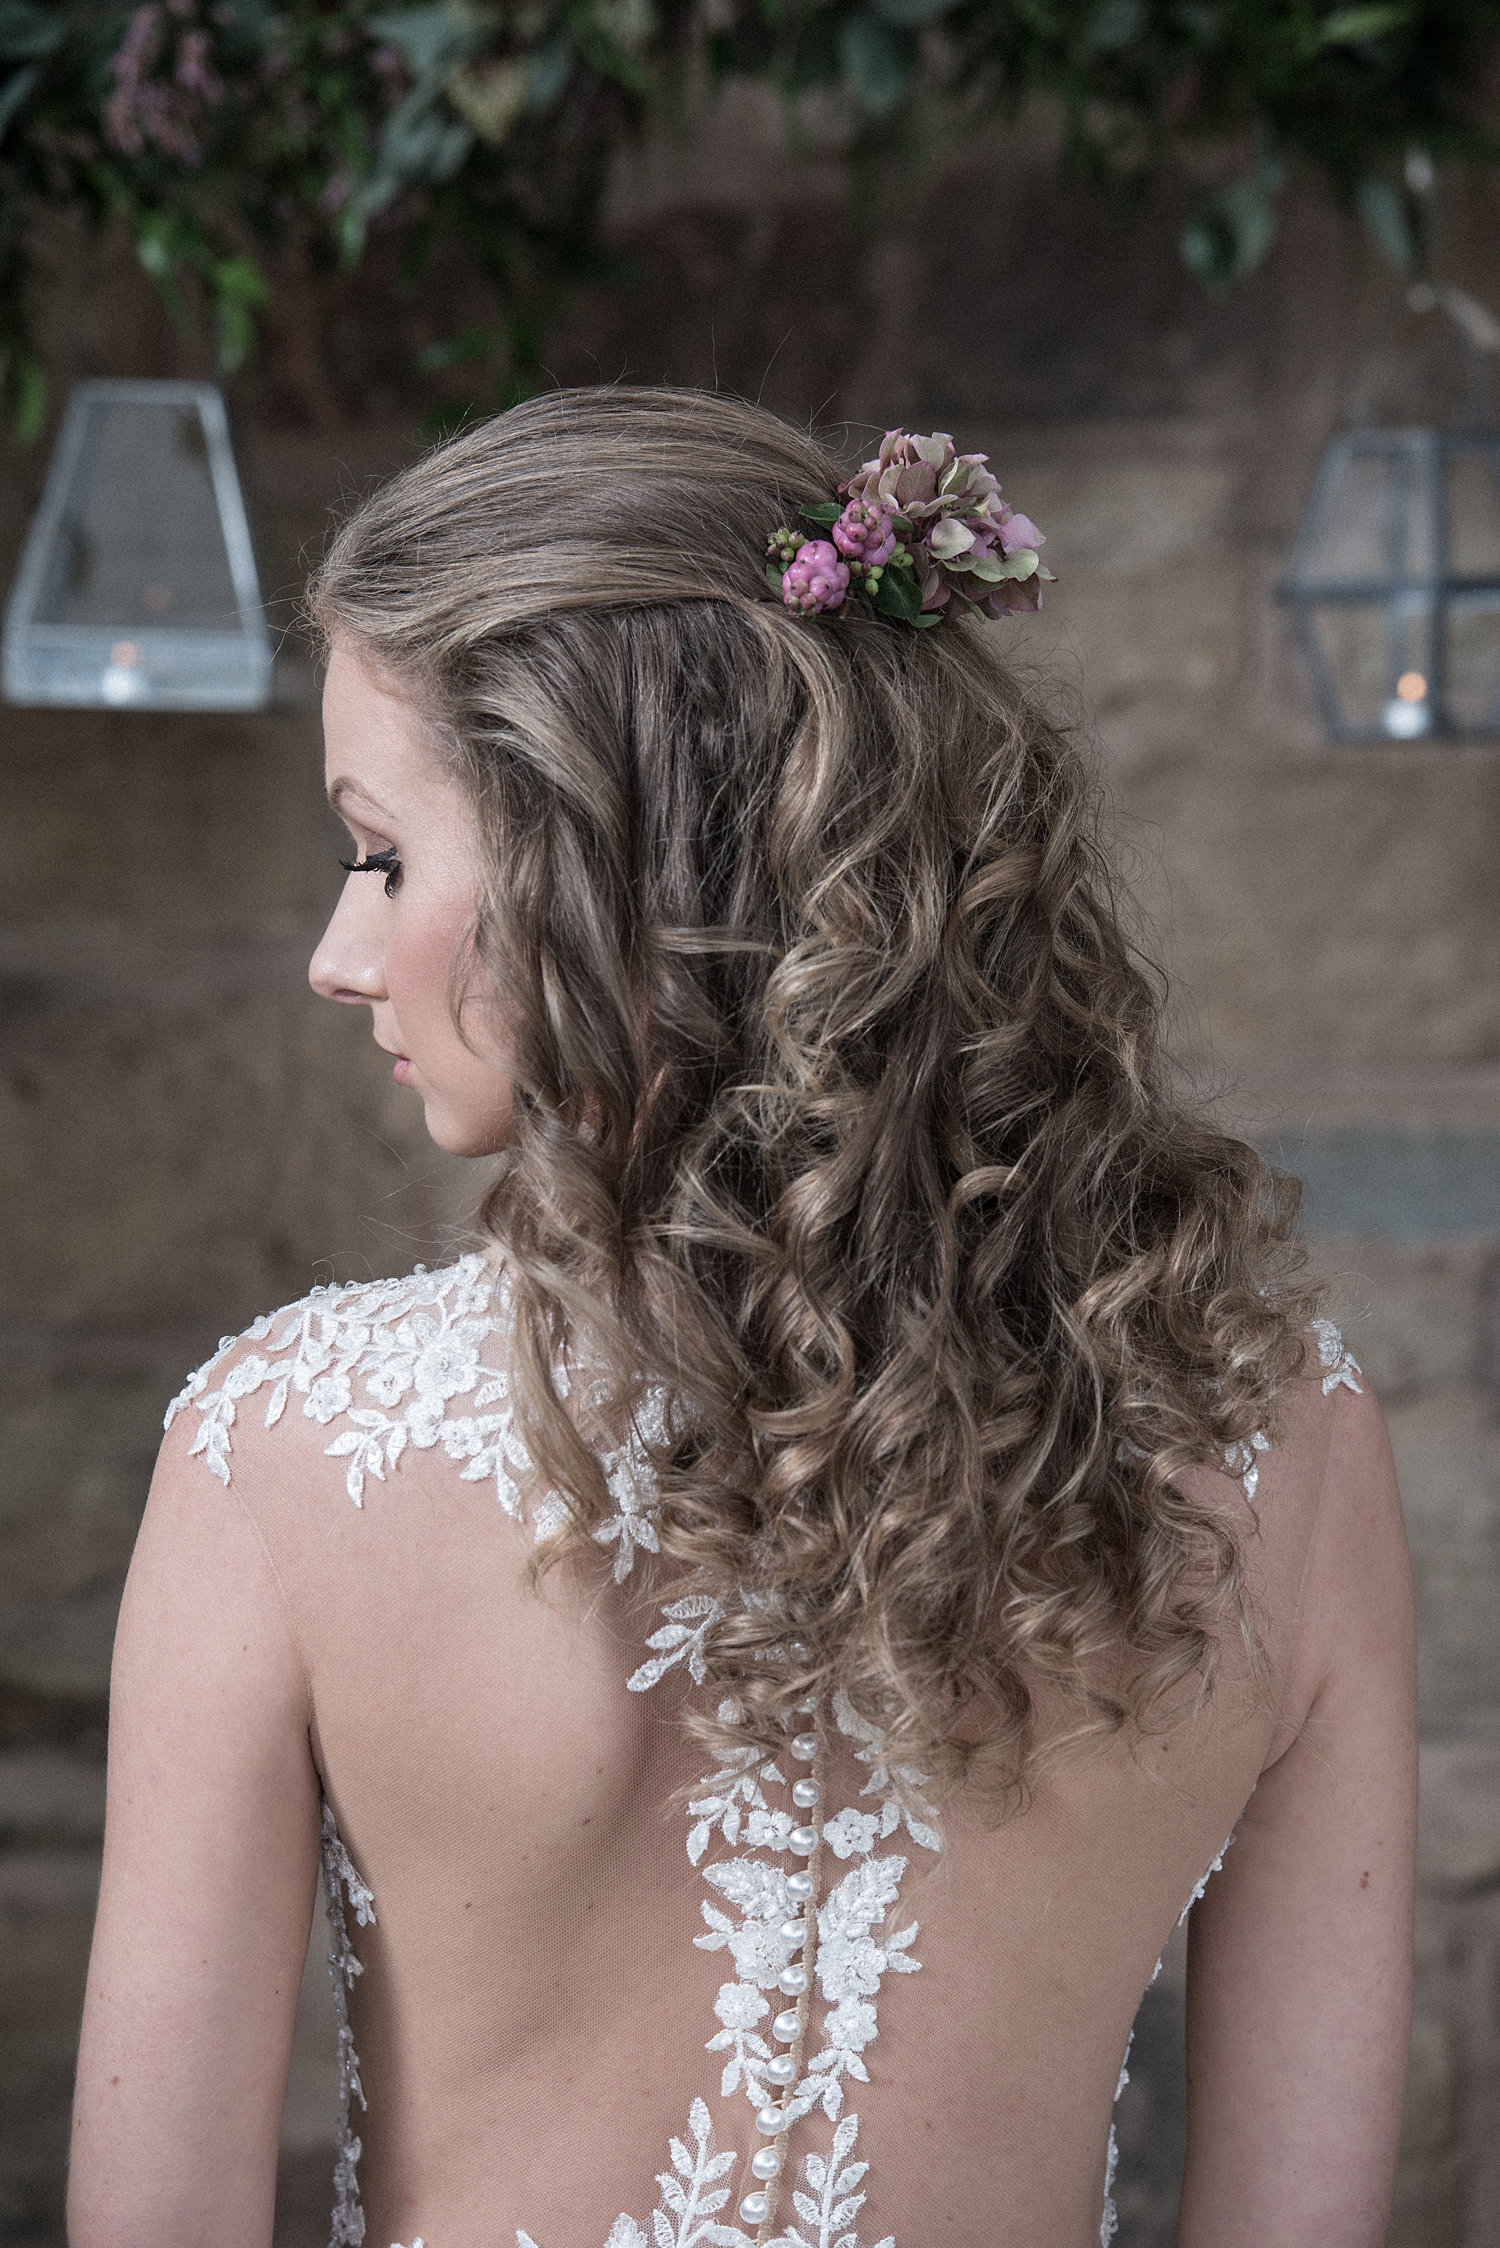 Bridal boho hair with flowers